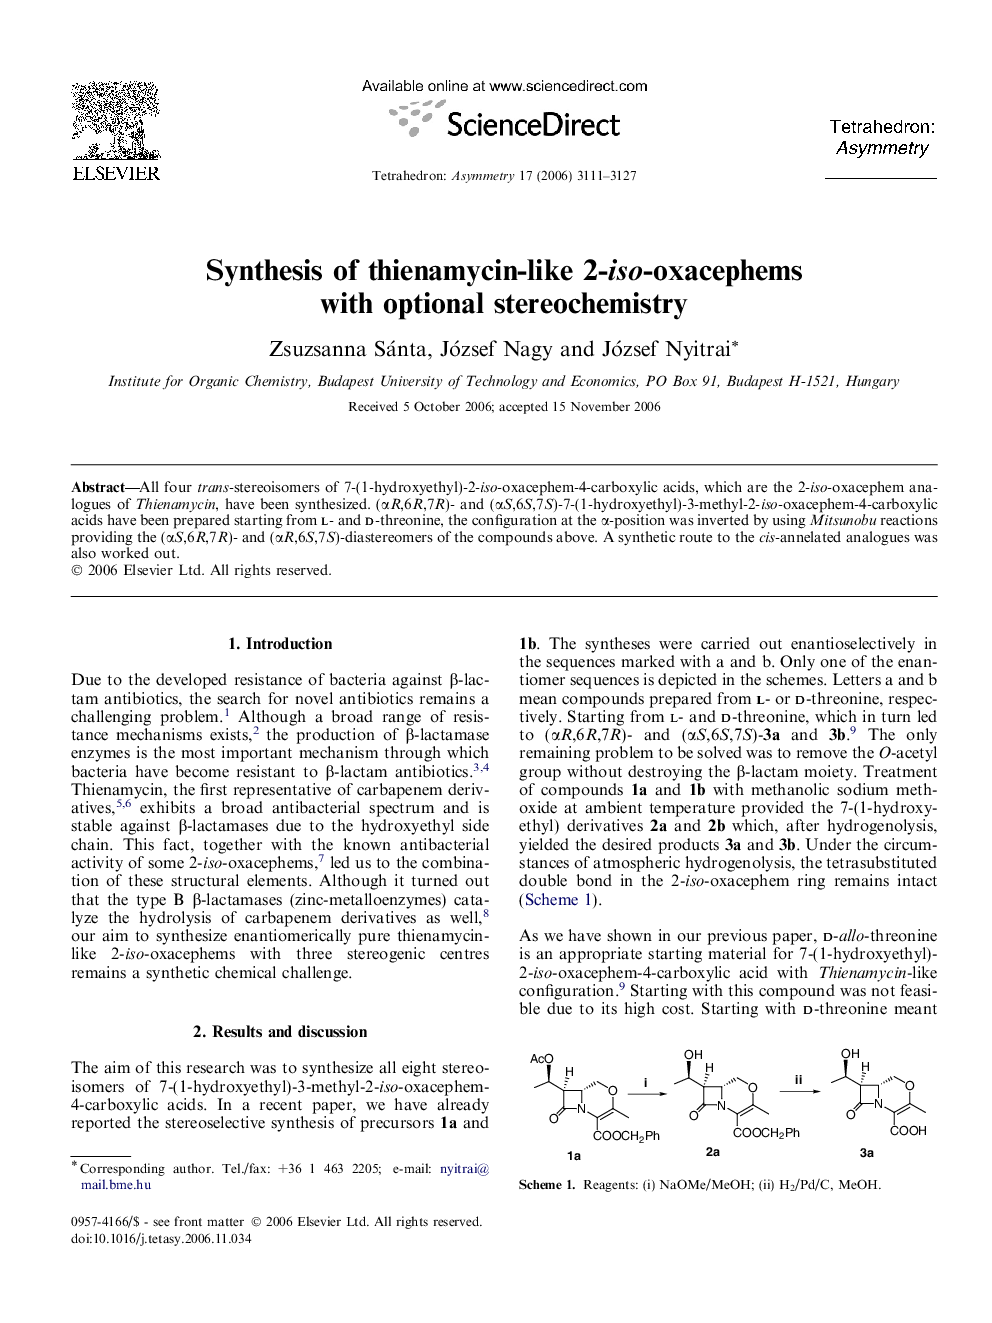 Synthesis of thienamycin-like 2-iso-oxacephems with optional stereochemistry